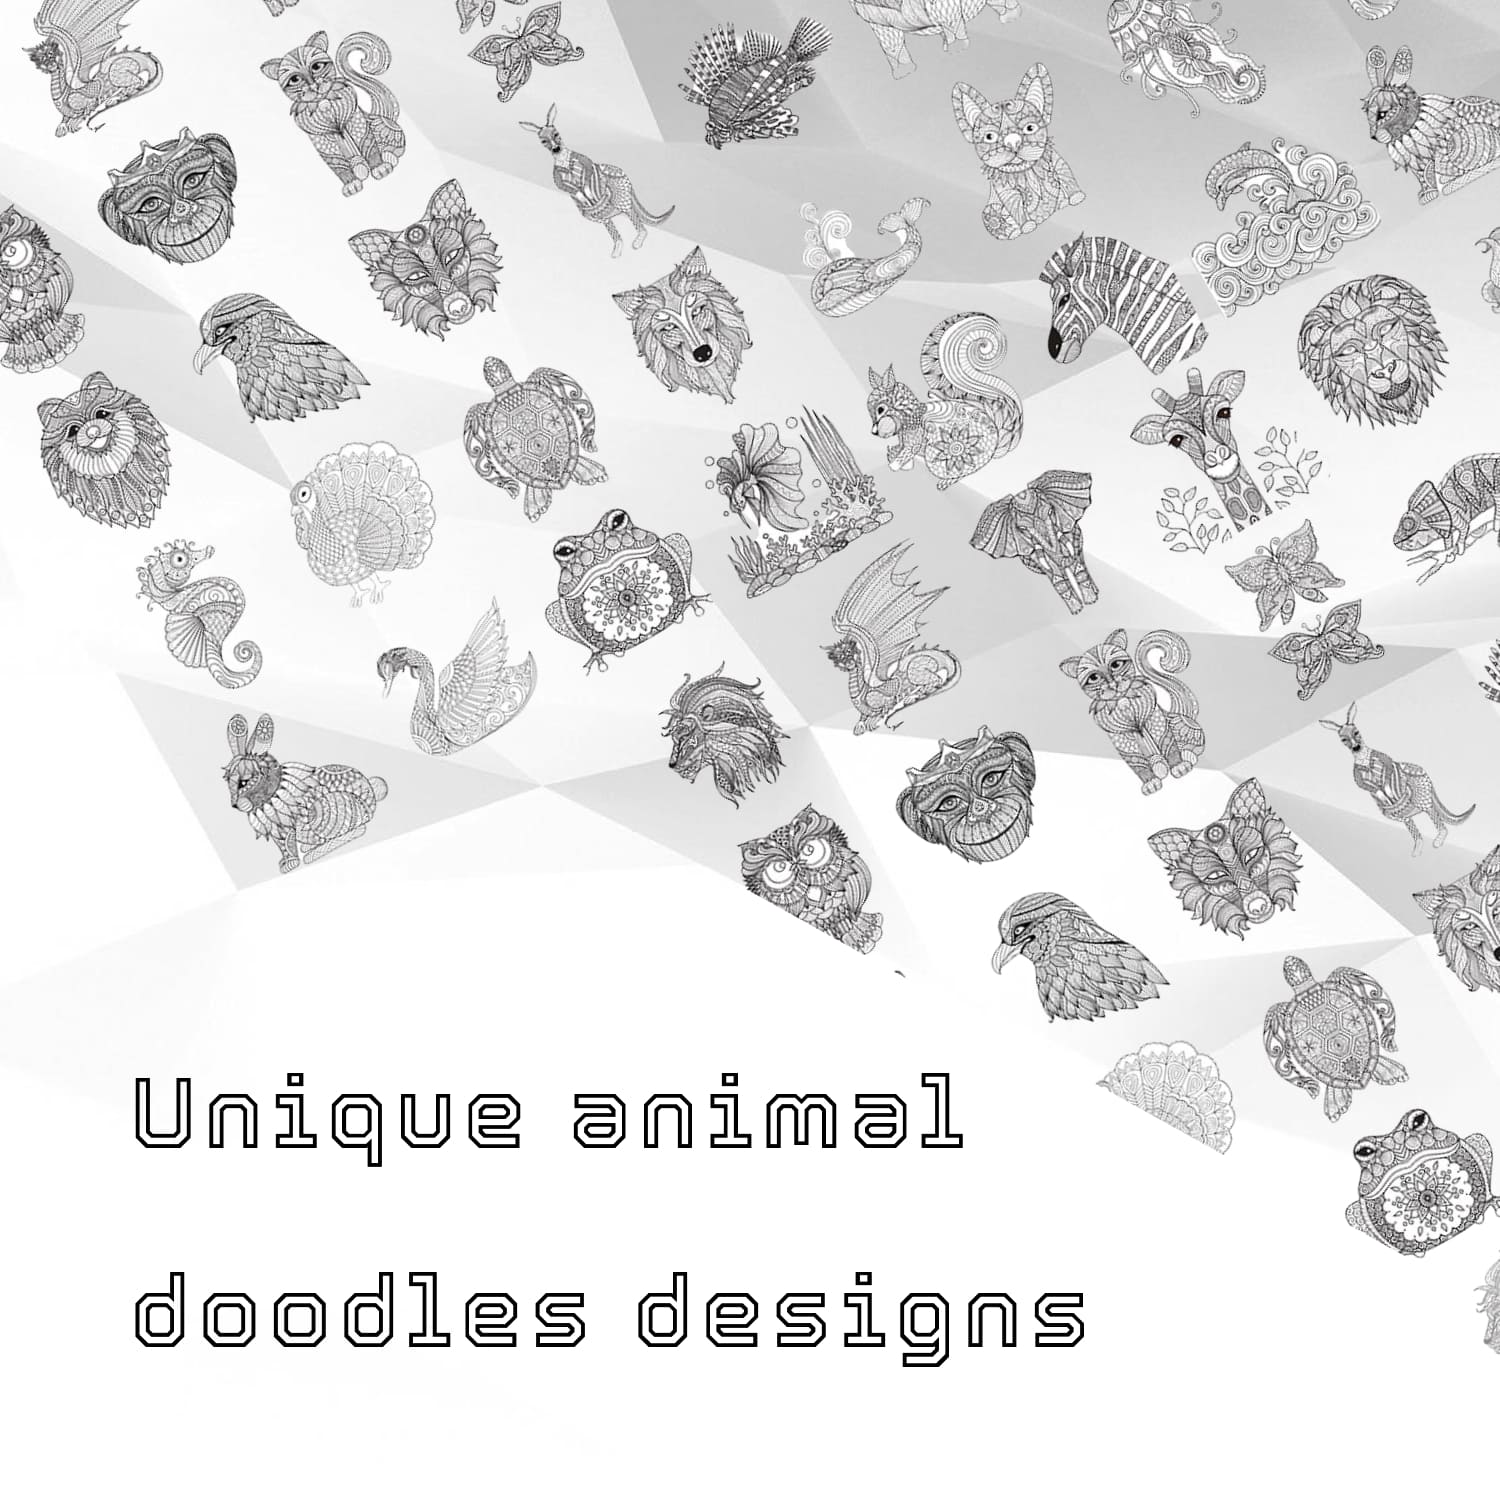 35 unique animal doodles designs.